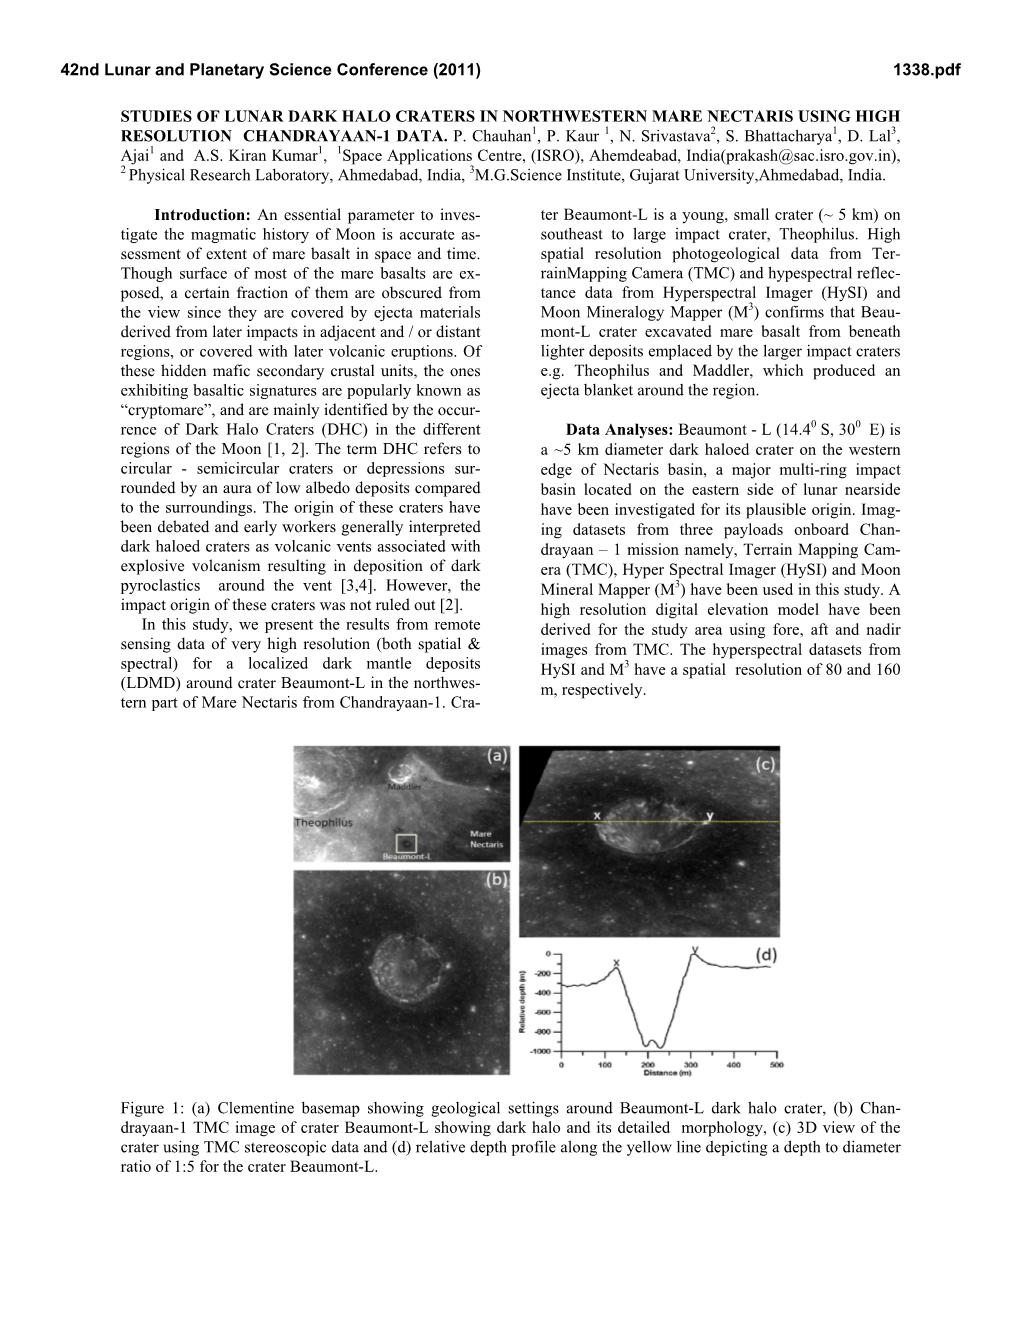 Studies of Lunar Dark Halo Craters in Northwestern Mare Nectaris Using High Resolution Chandrayaan-1 Data